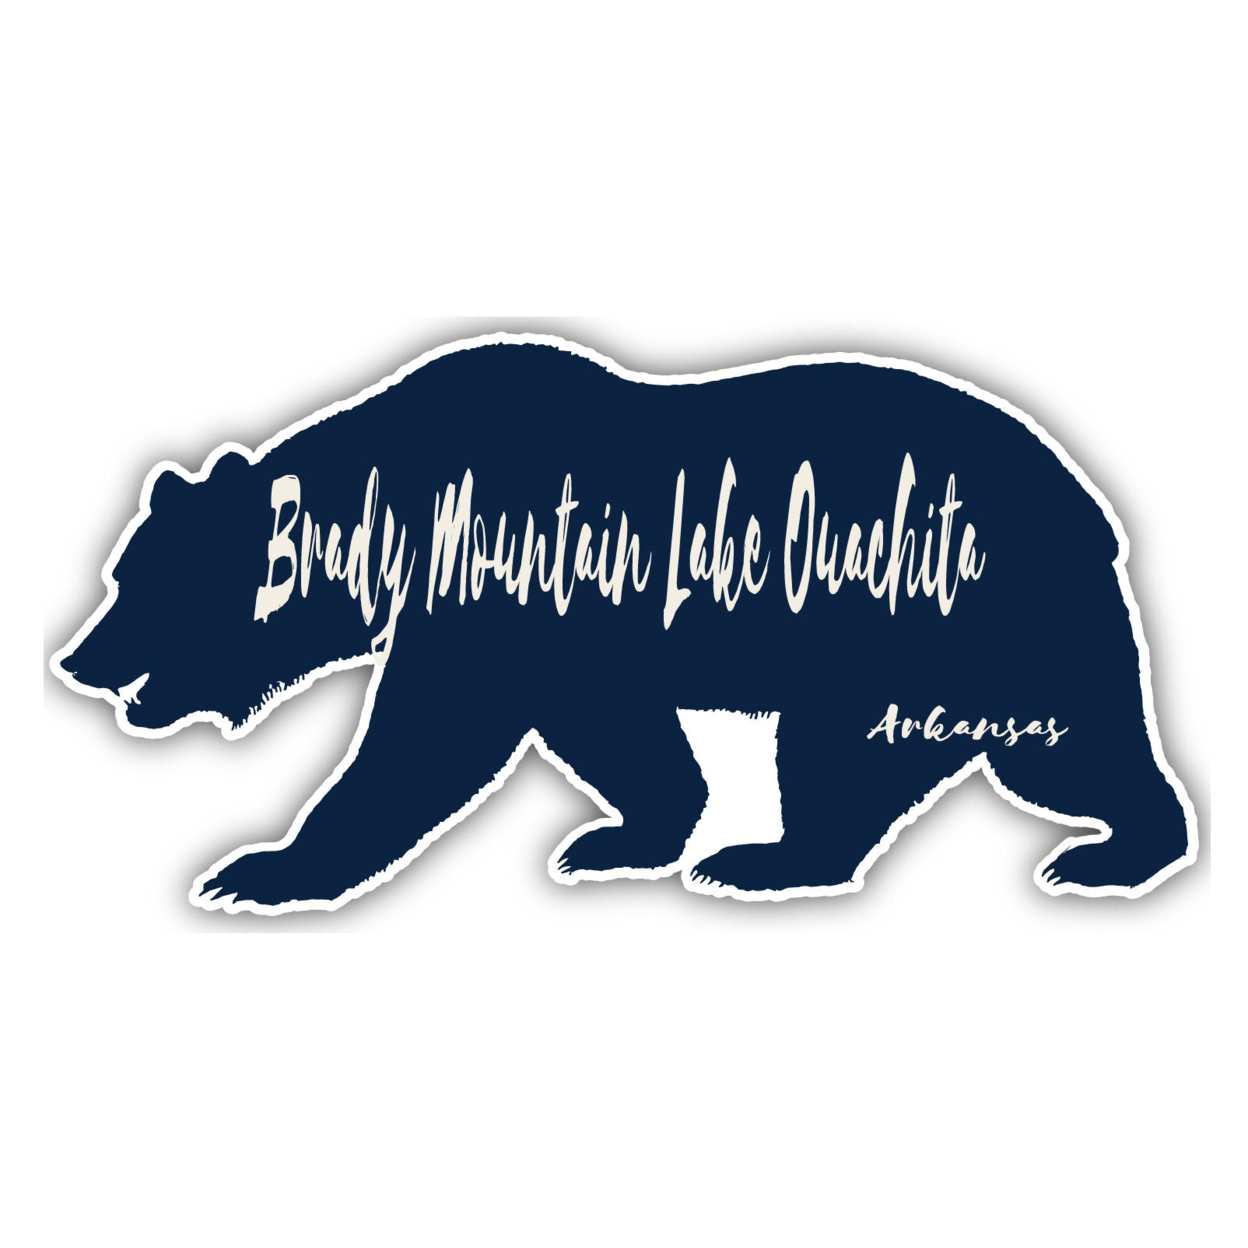 Brady Mountain Lake Ouachita Arkansas Souvenir Decorative Stickers (Choose Theme And Size) - Single Unit, 2-Inch, Camp Life